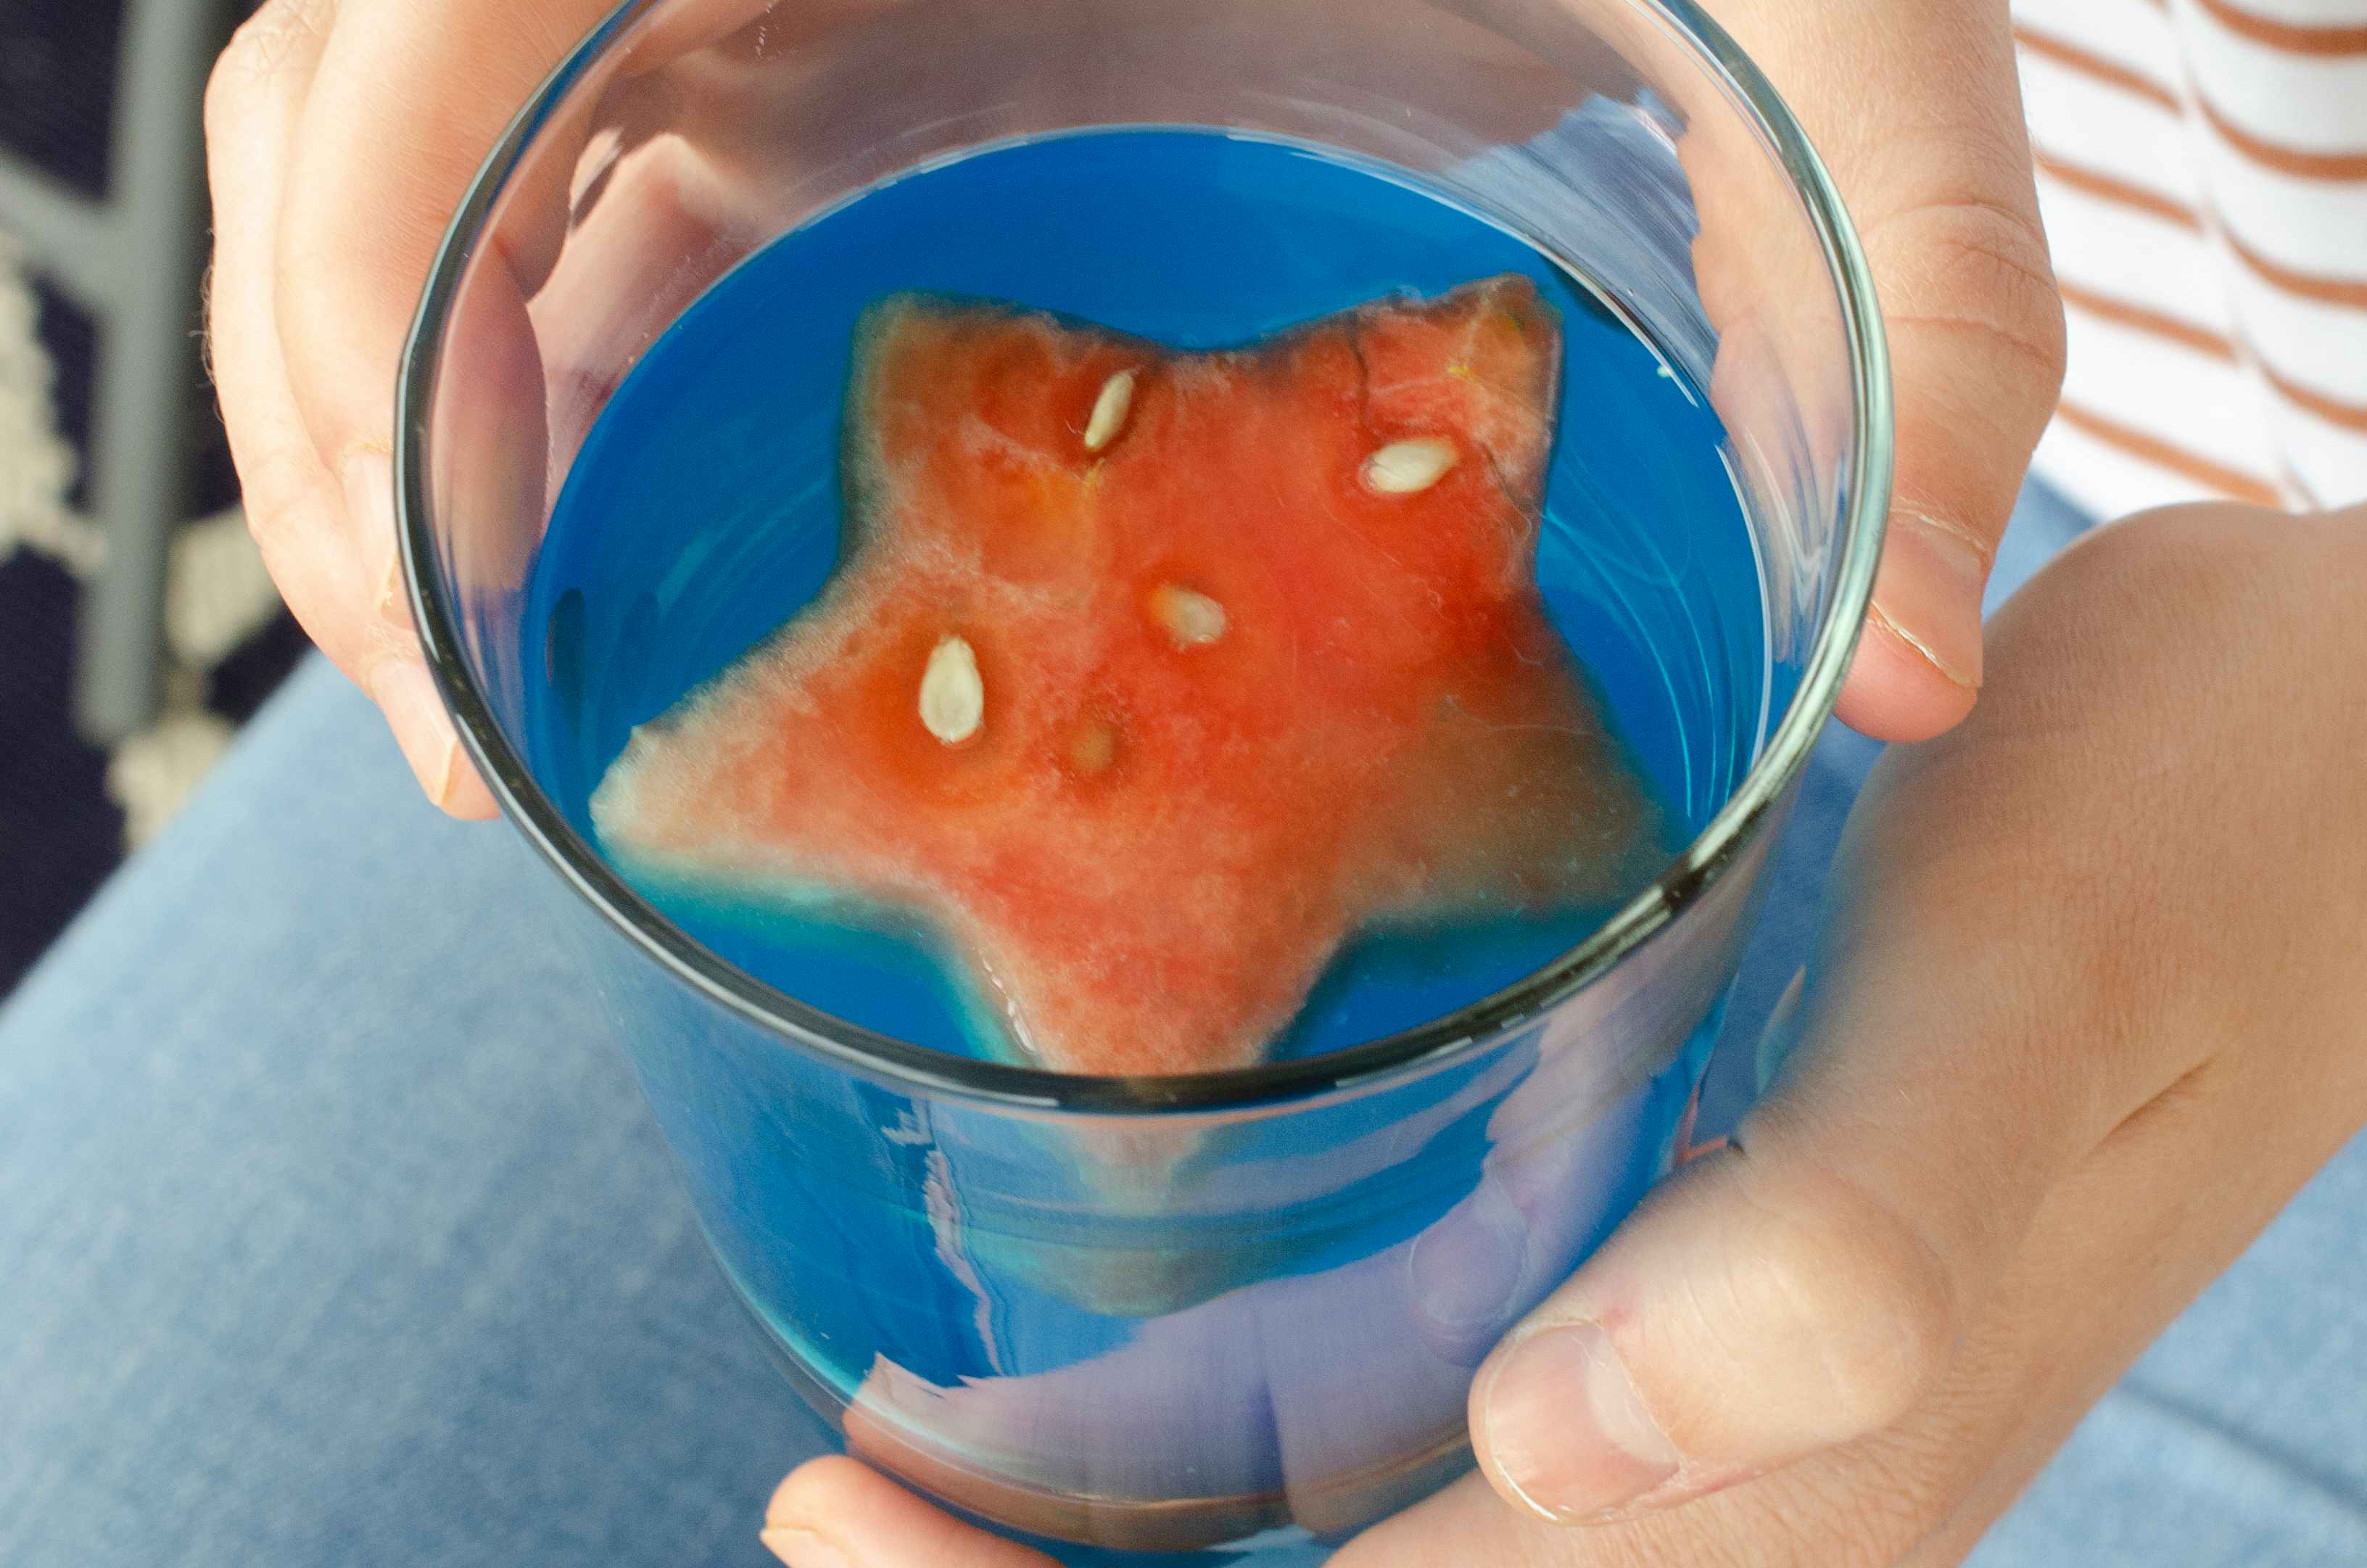 A piece of watermelon cut like a star in a blue drink glass.